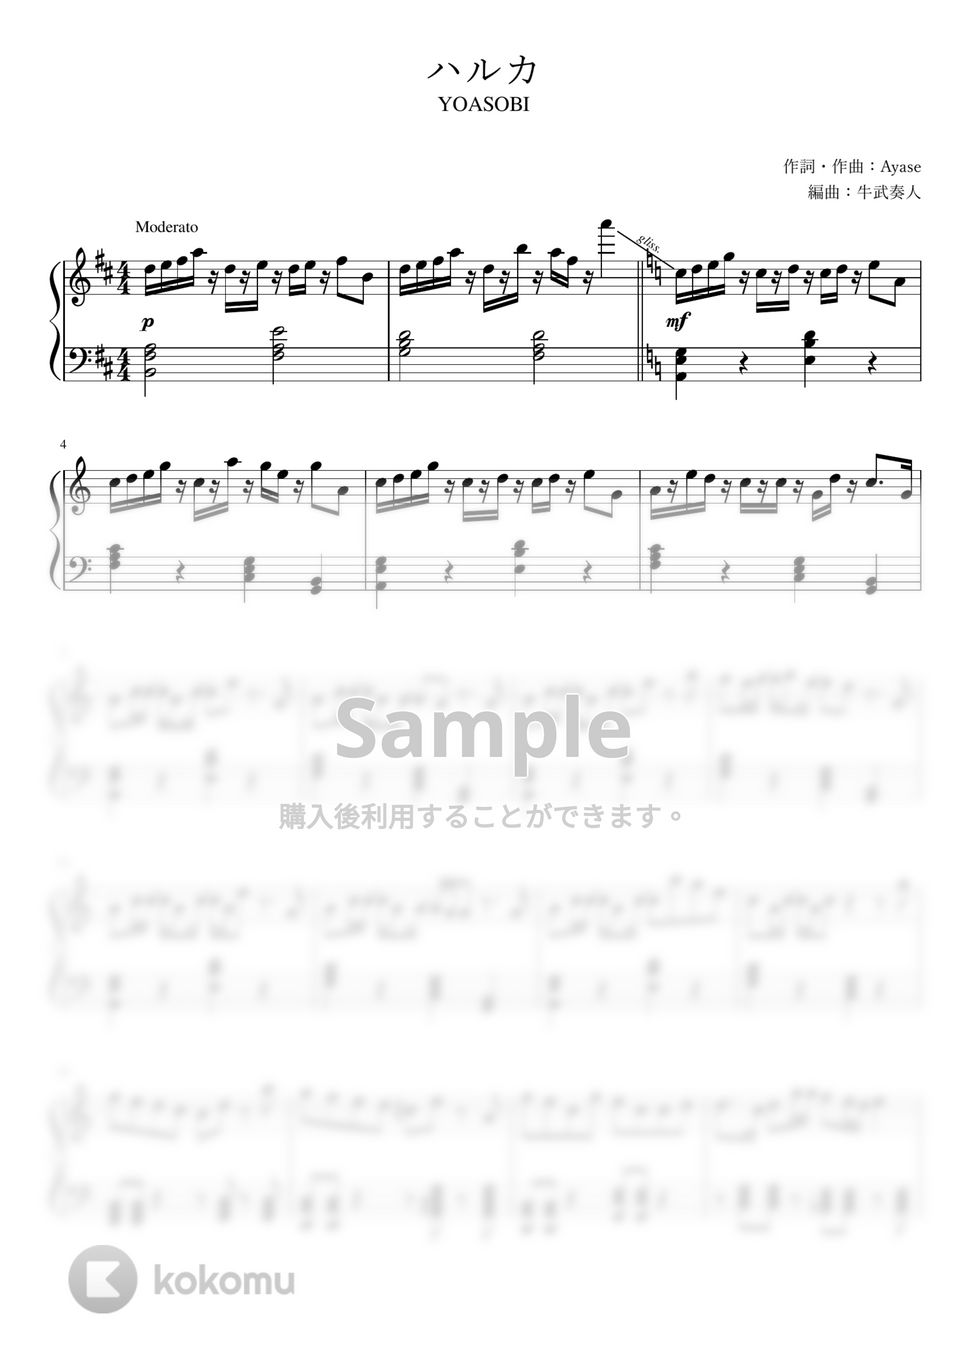 YOASOBI - ハルカ (中級ピアノソロ) by 牛武奏人